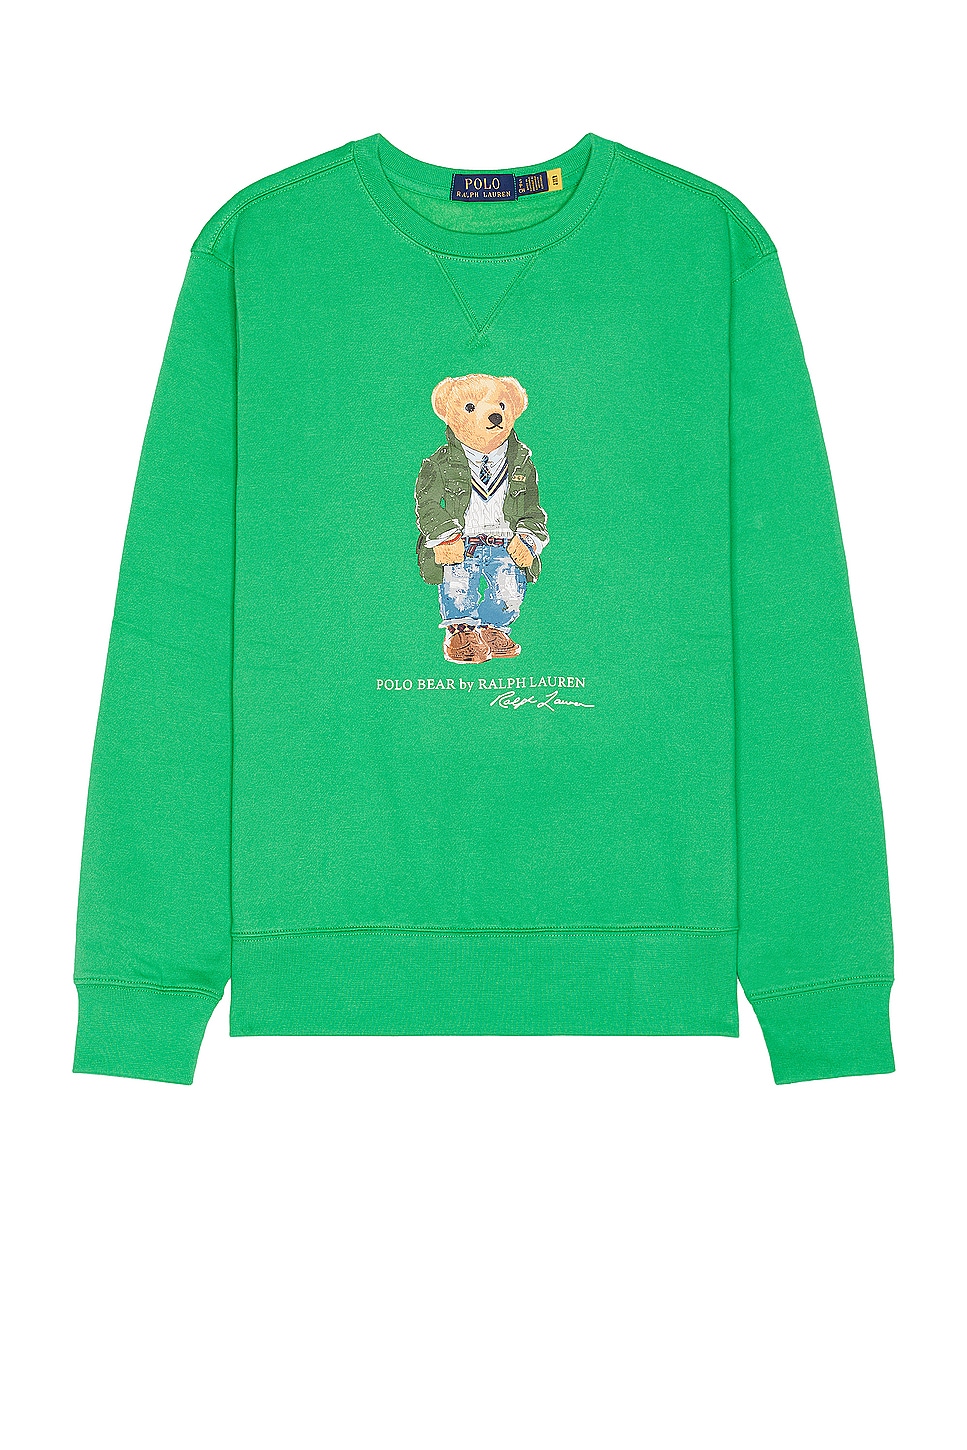 Image 1 of Polo Ralph Lauren Bears Sweater in Sp24 Tiller Green Hrtg Bear